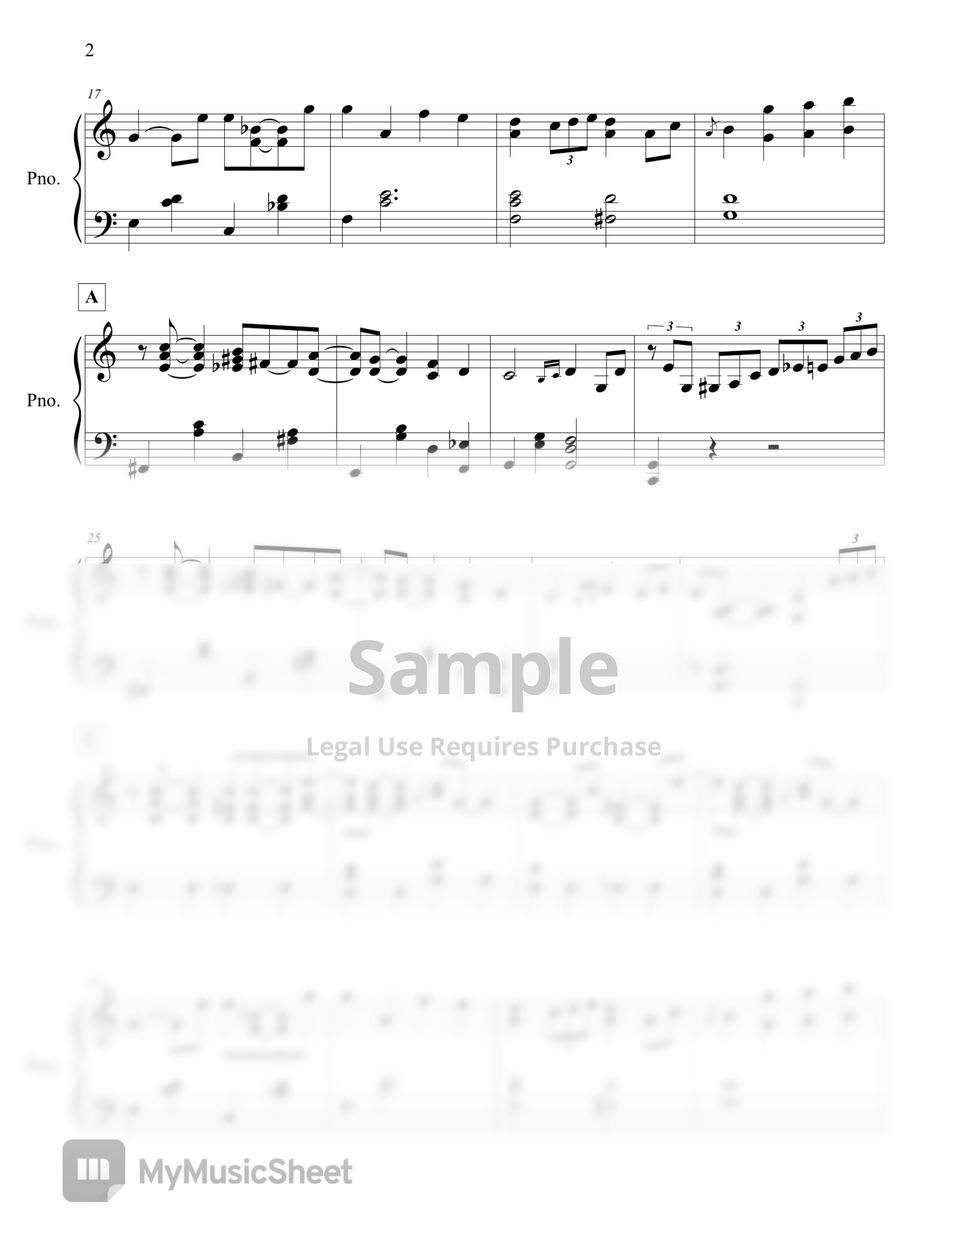 F. Mendelssohn - 색다른 축혼 행진곡(Wedding March) by Keunyoung Song(송근영)